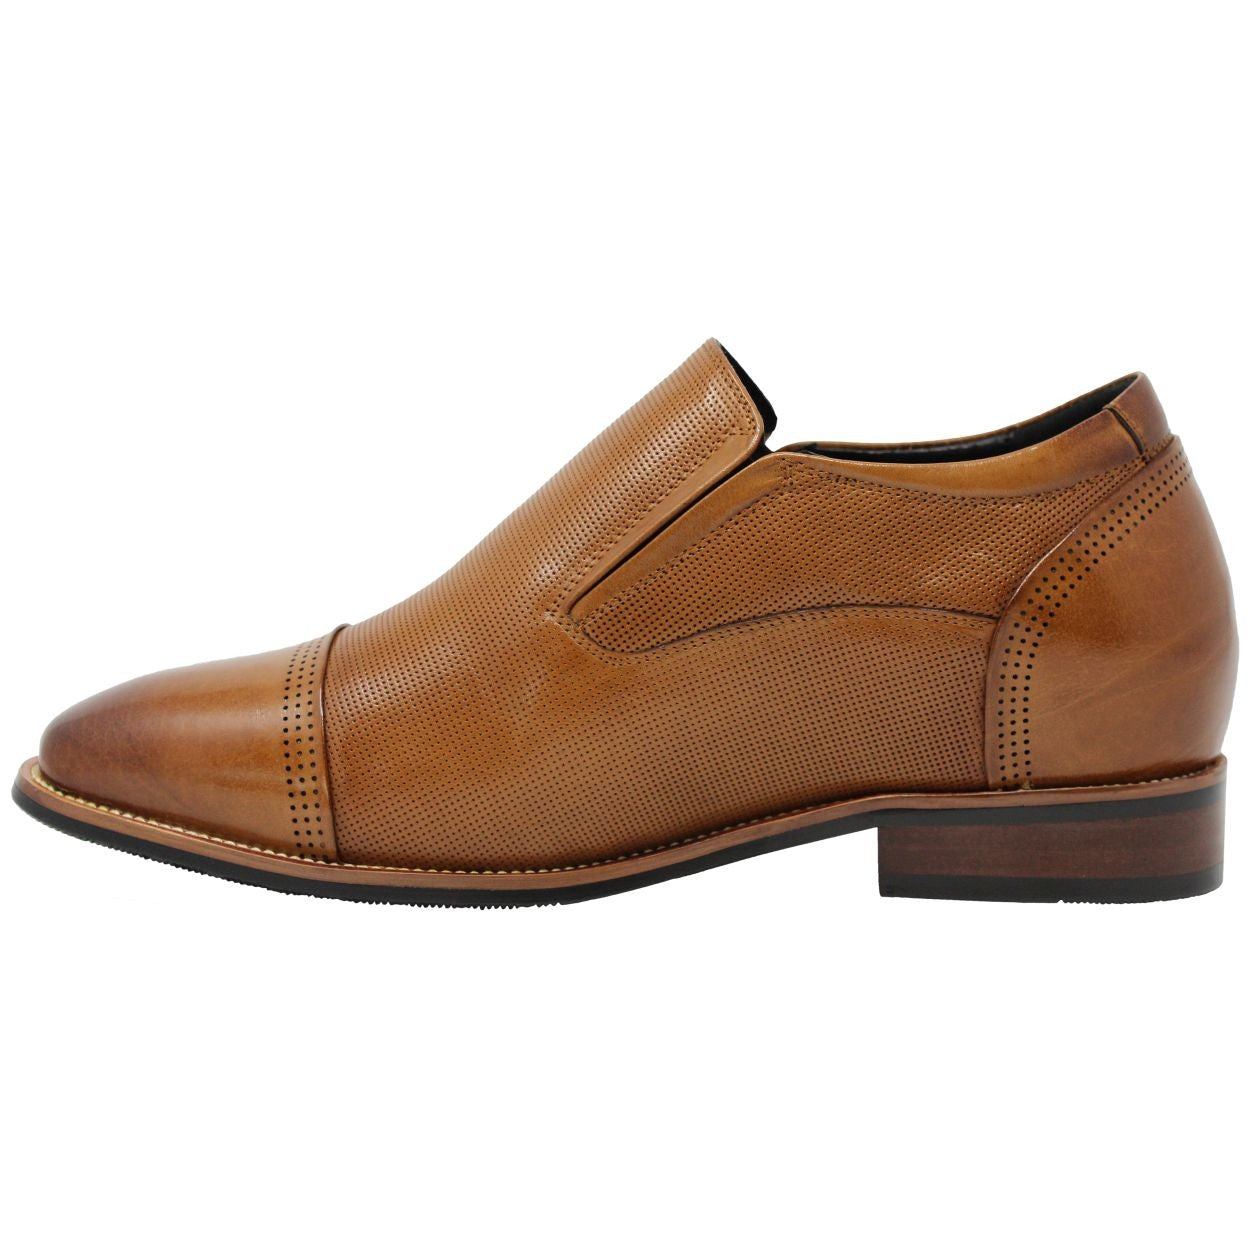 CALTO Leather Slip-on Elevator Shoes Y10658 - TallMenShoes.com ...